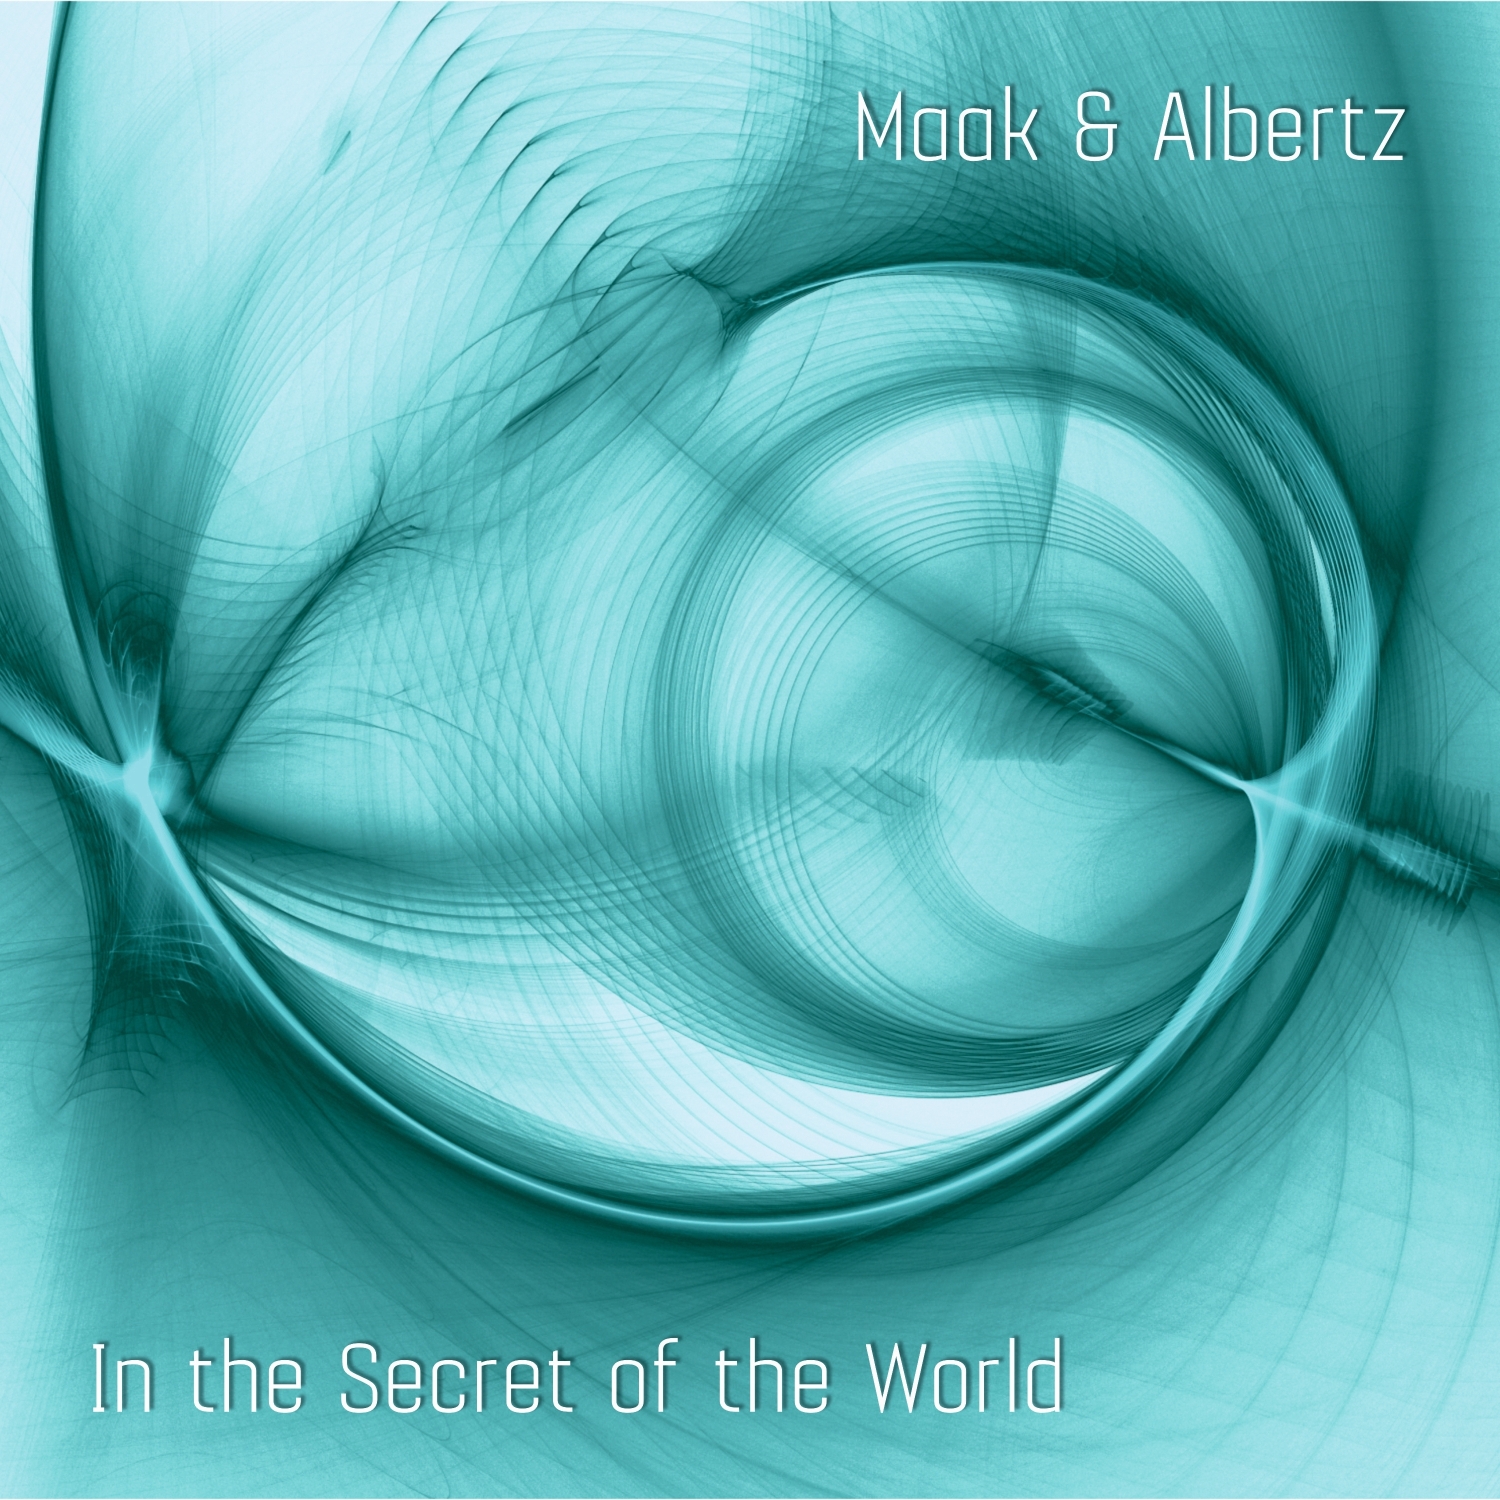 BUY Maak & Albertz's new Album 'In the Secret of the World'